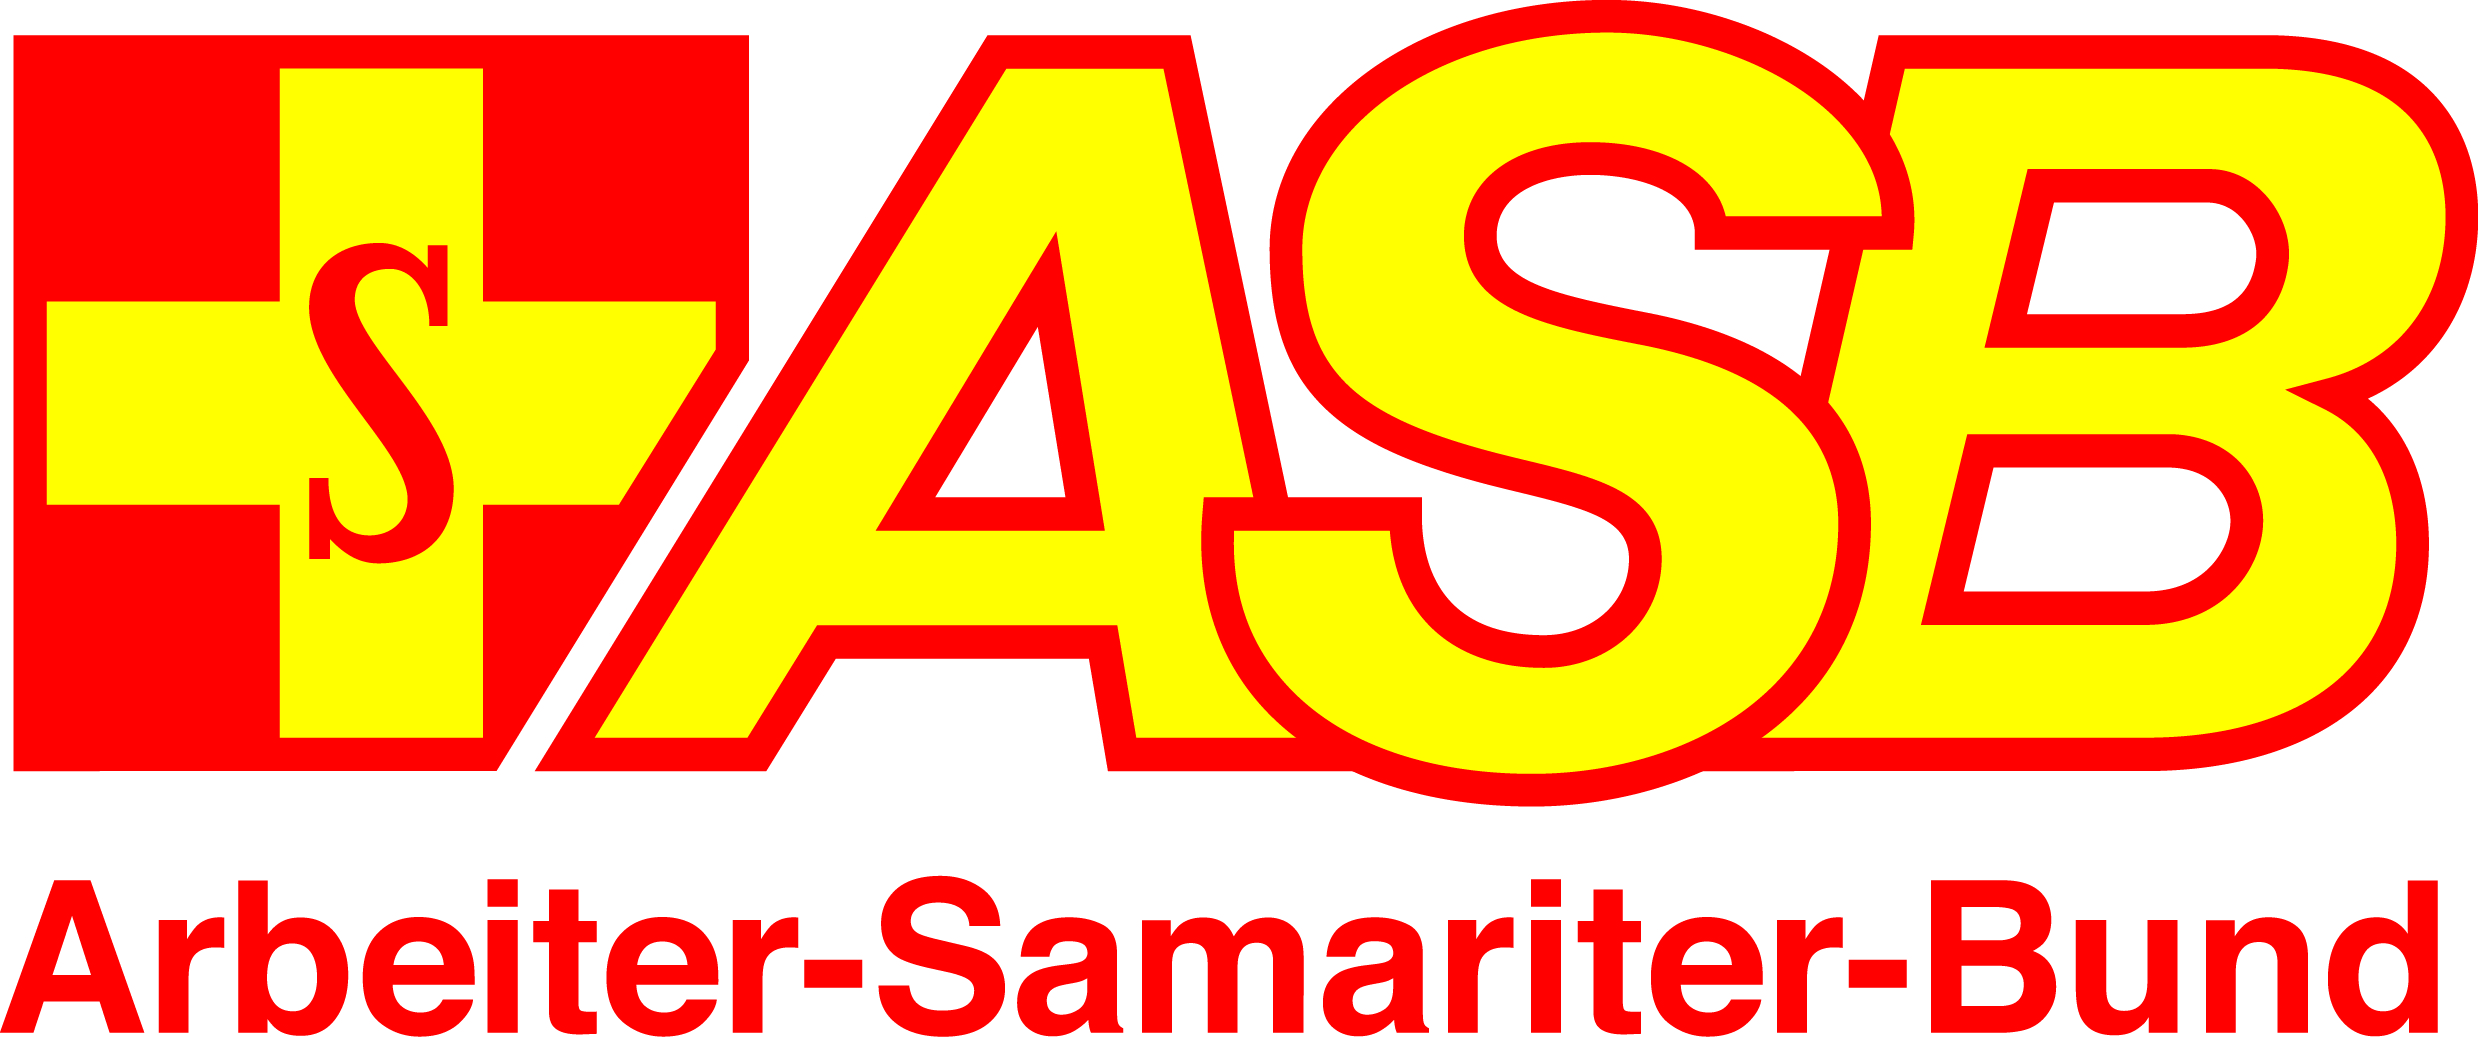 ASB-Logo-CMYK-2016.jpg